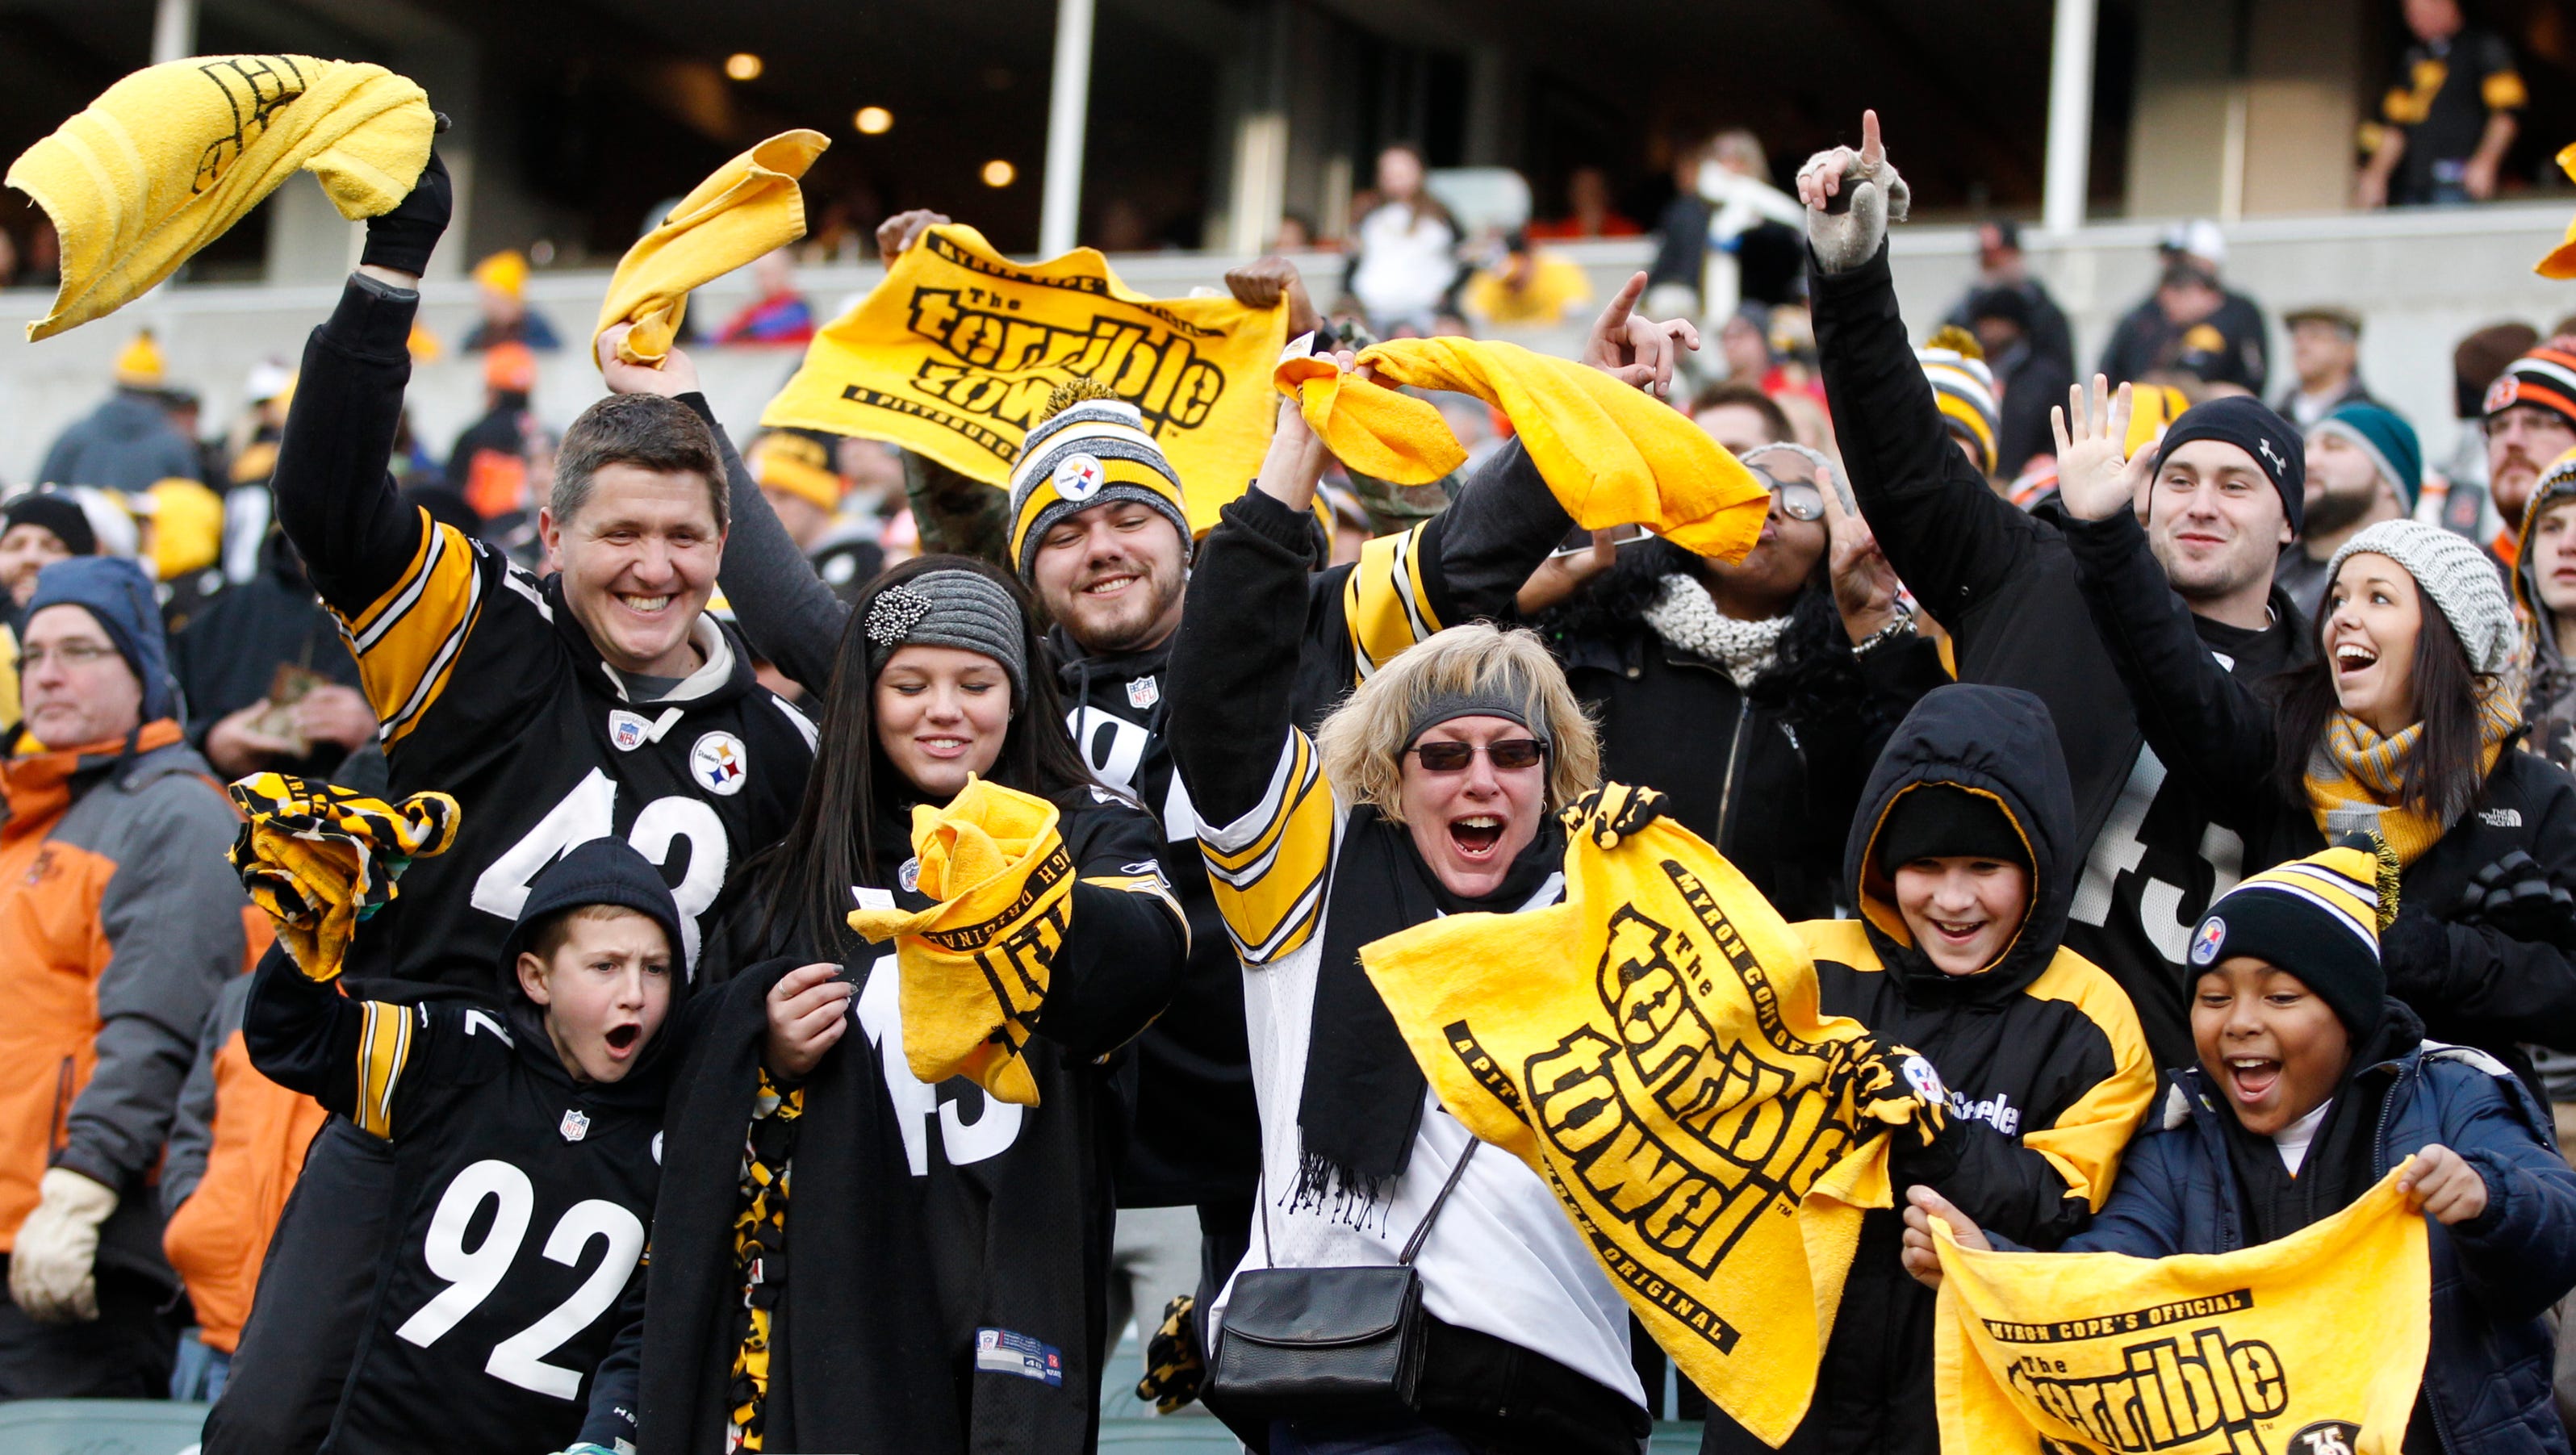 Steelers fans most profane on social media Cincinnati.com (blog) Among play...